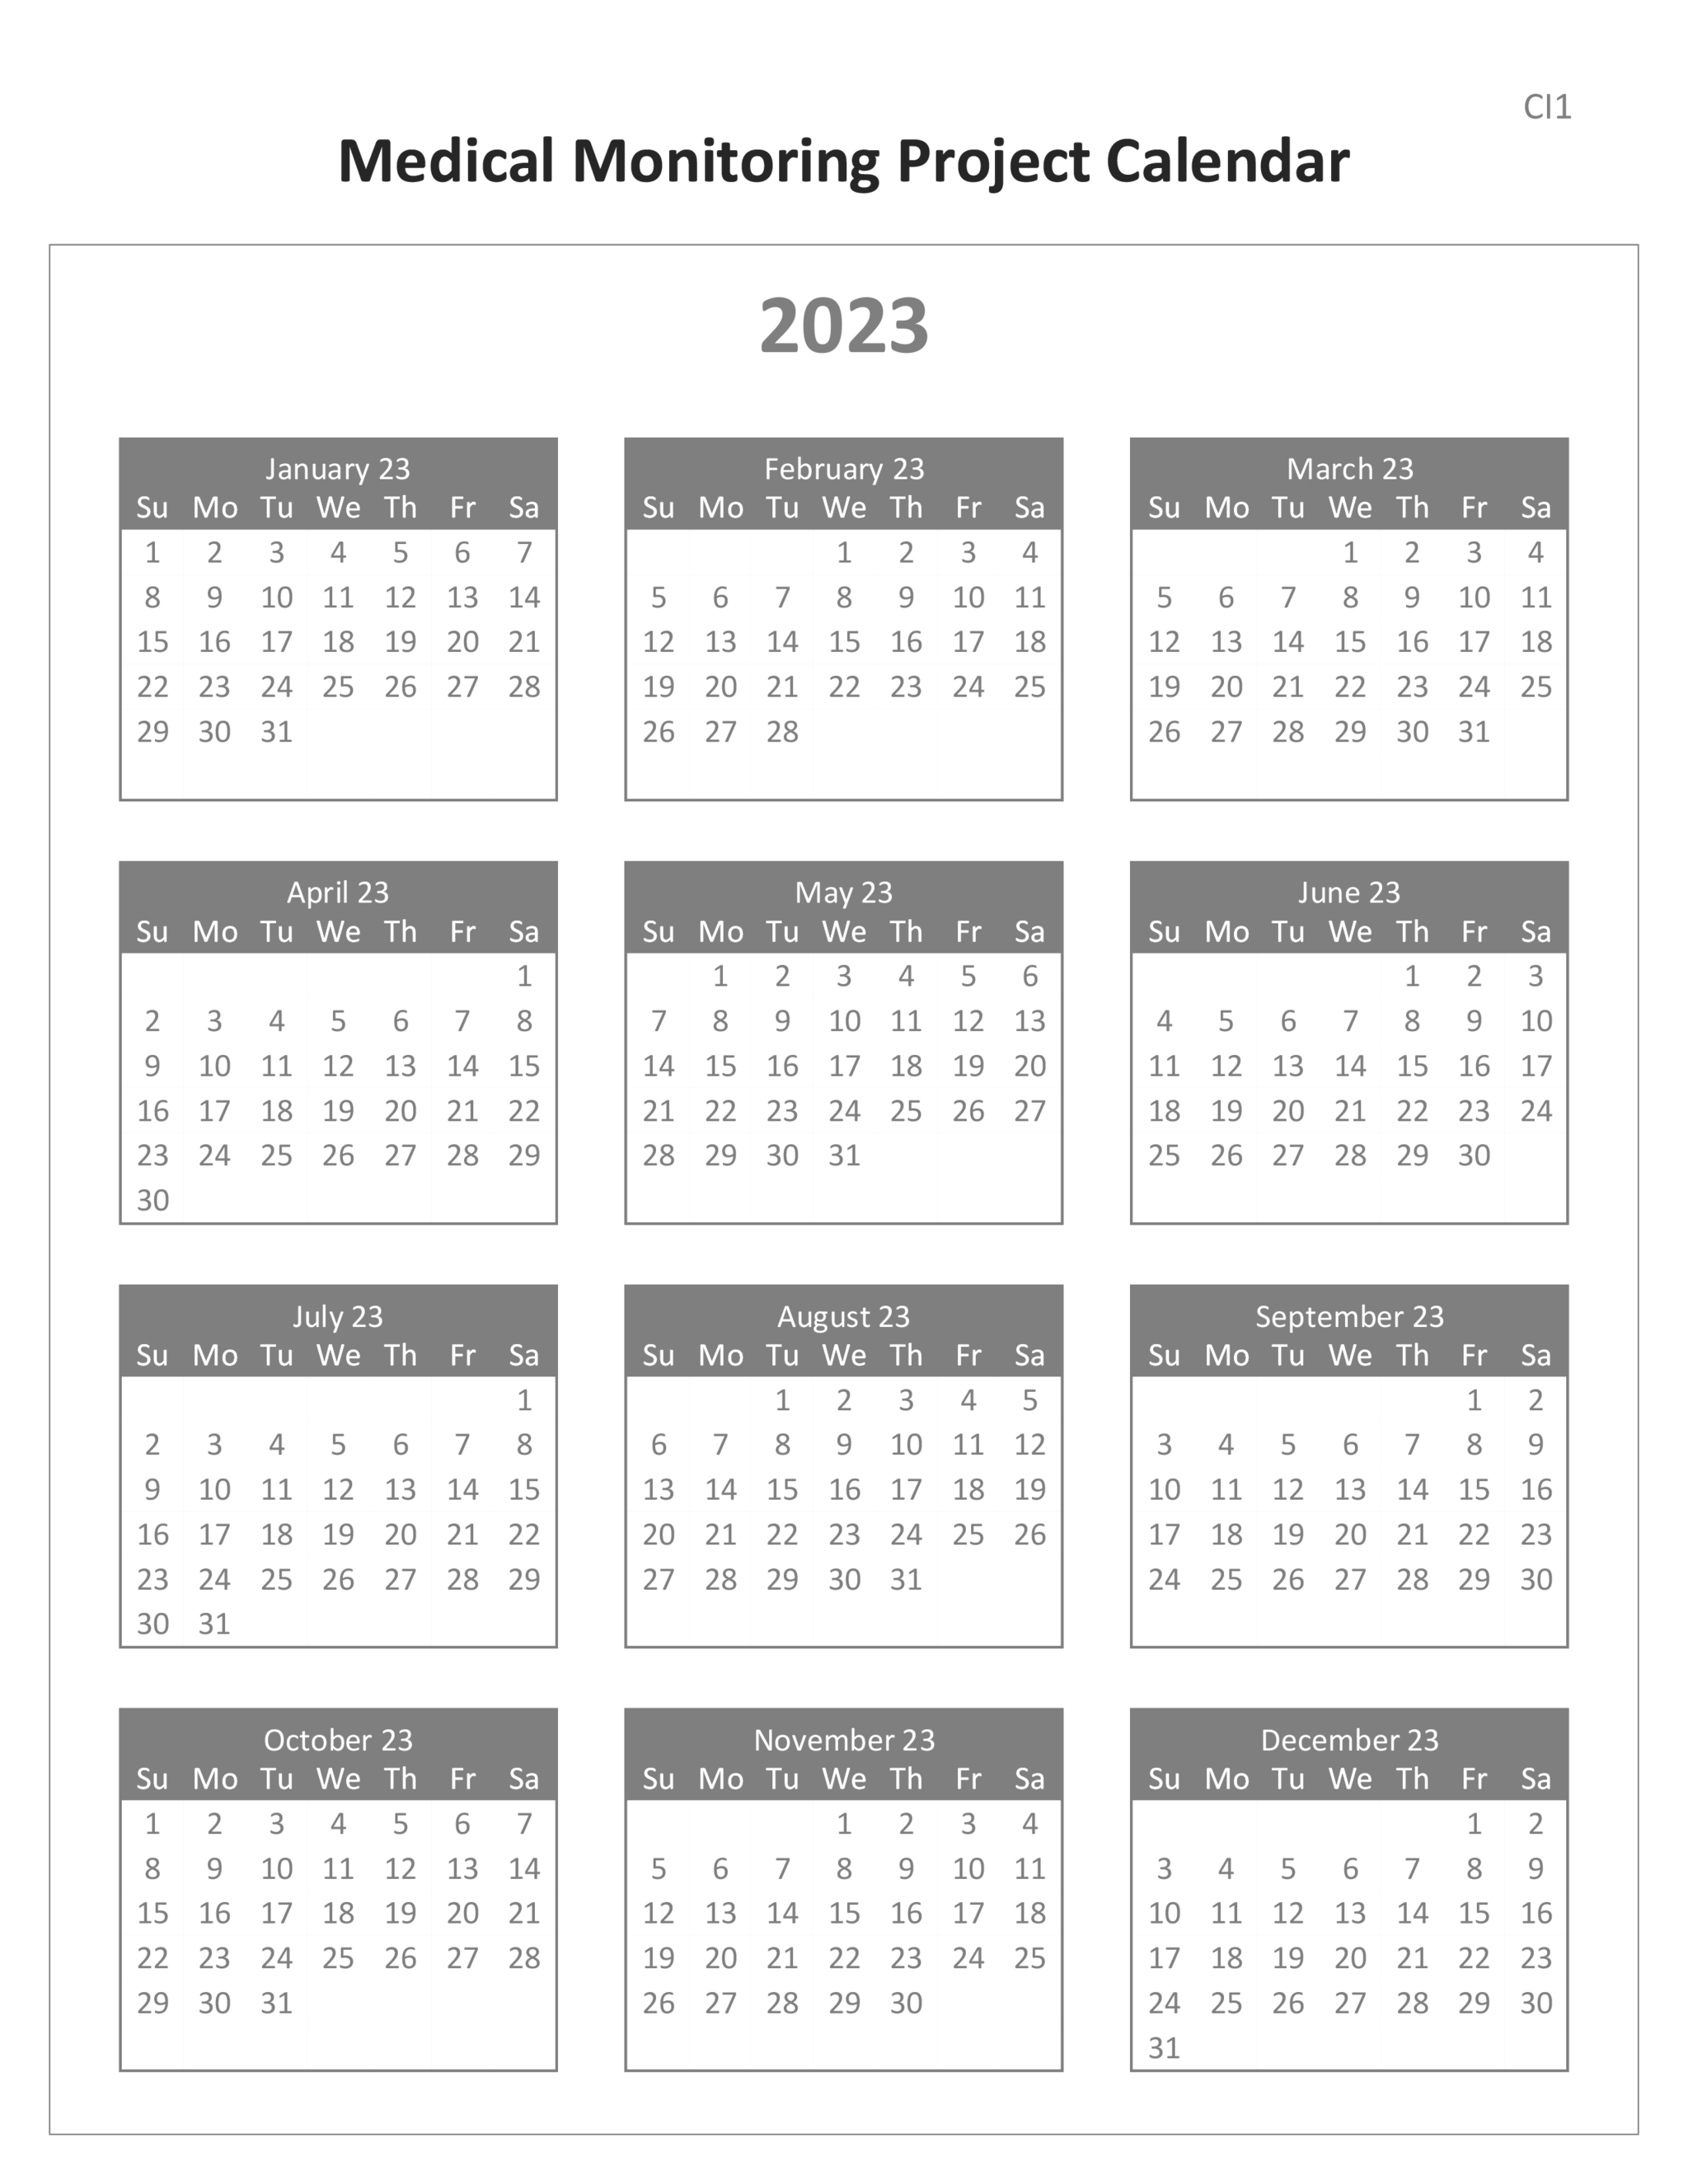 2023 Medical Monitoring Project Calendar